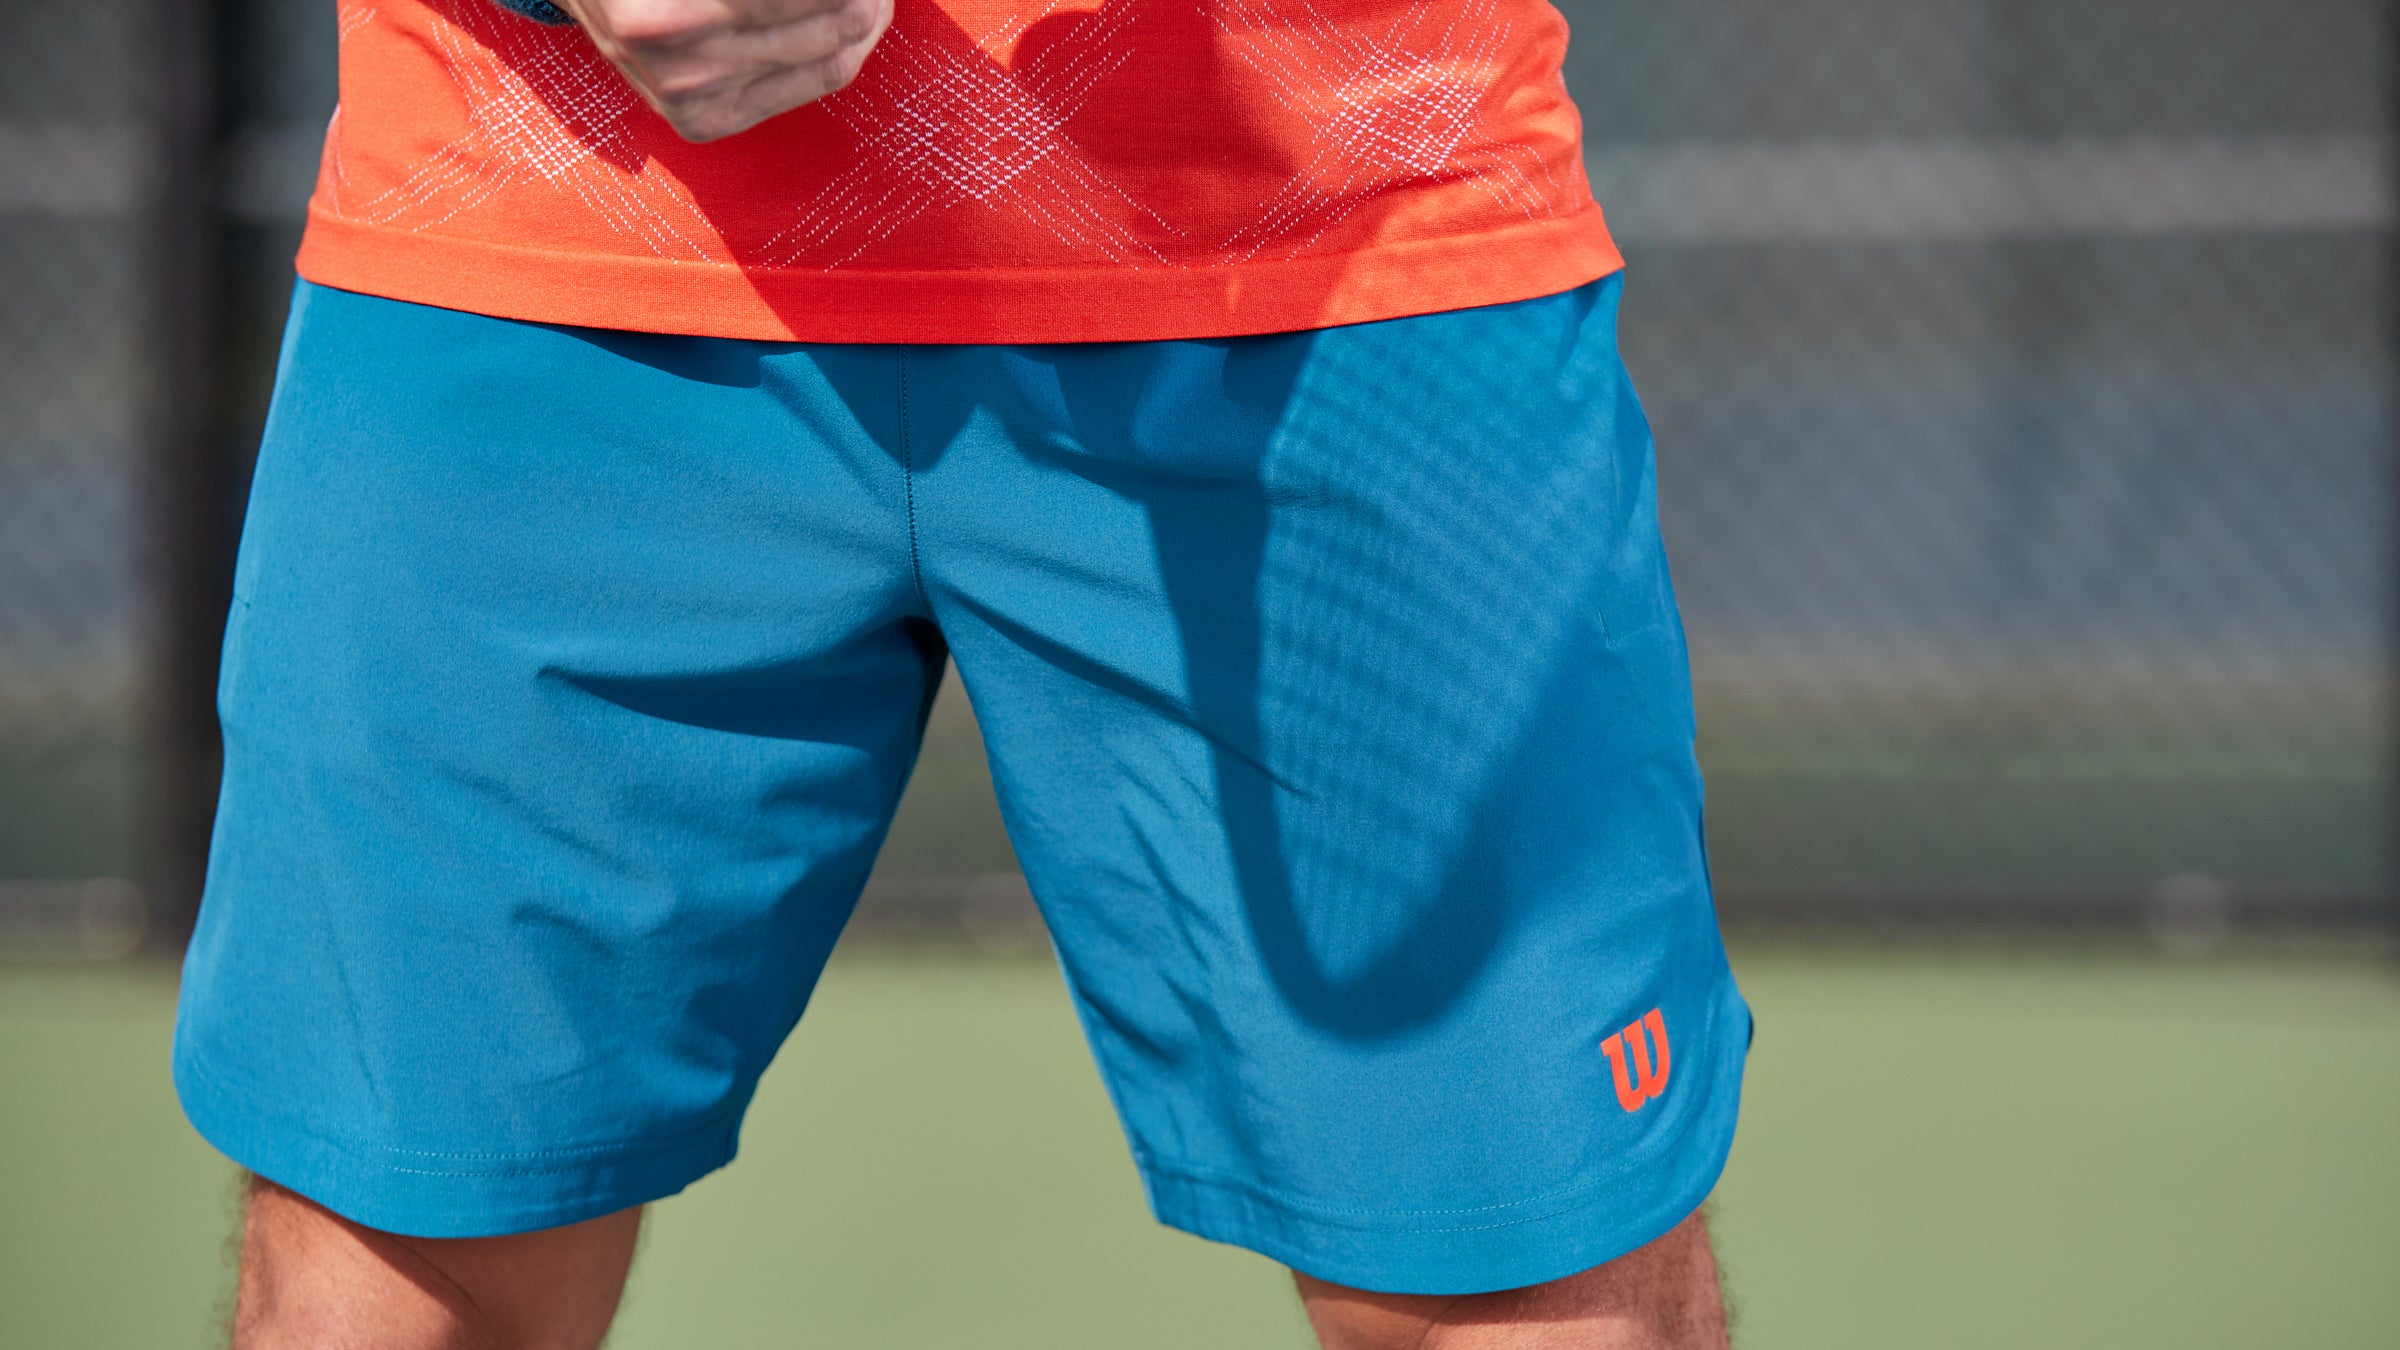 Wilson tennis apparels